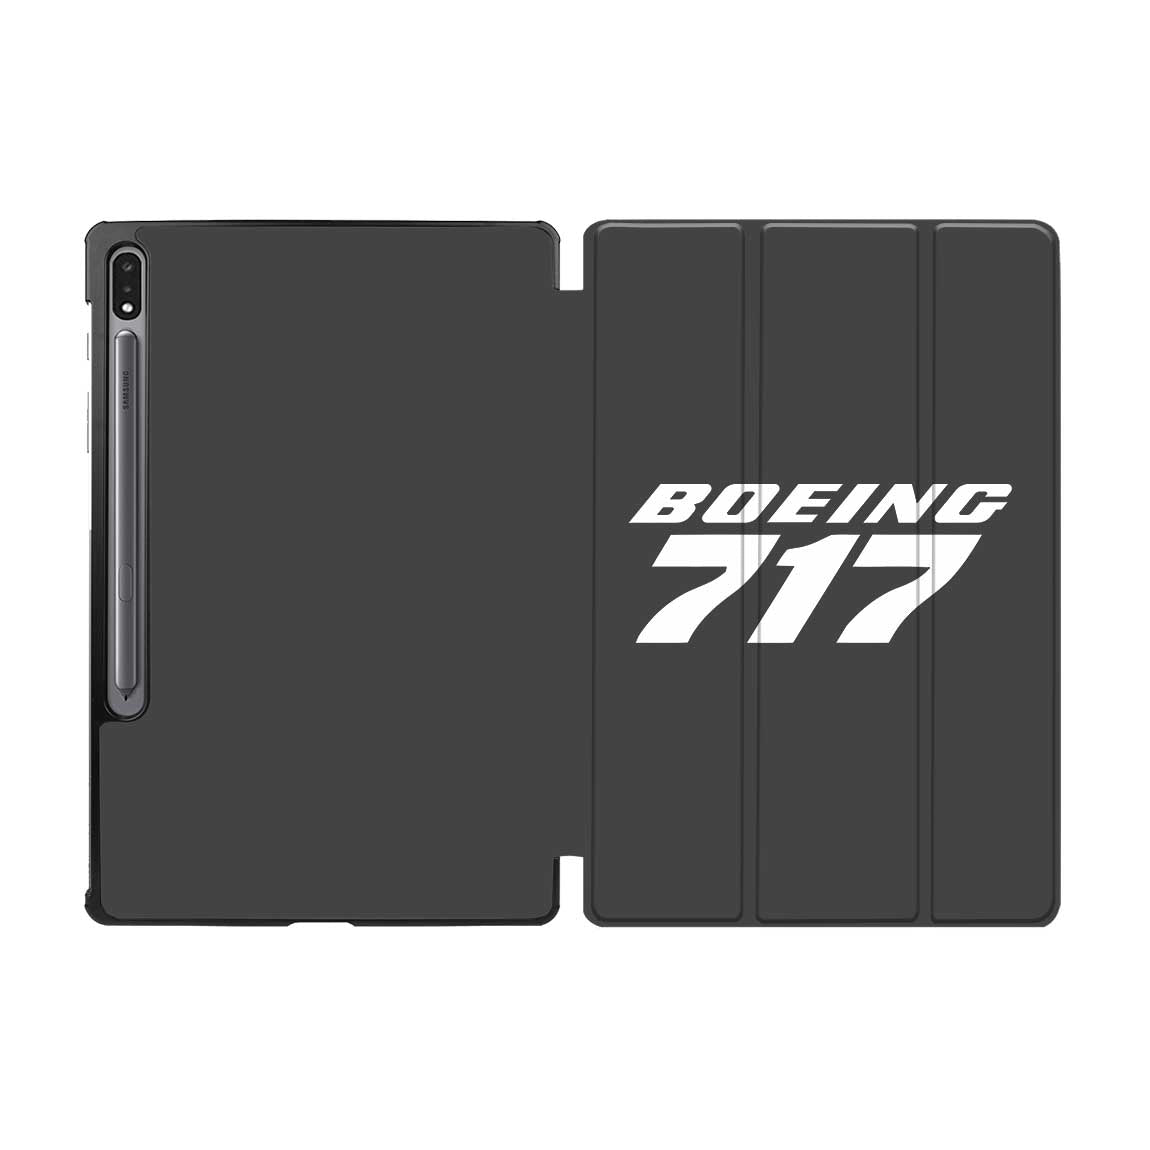 Boeing 717 & Text Designed Samsung Tablet Cases